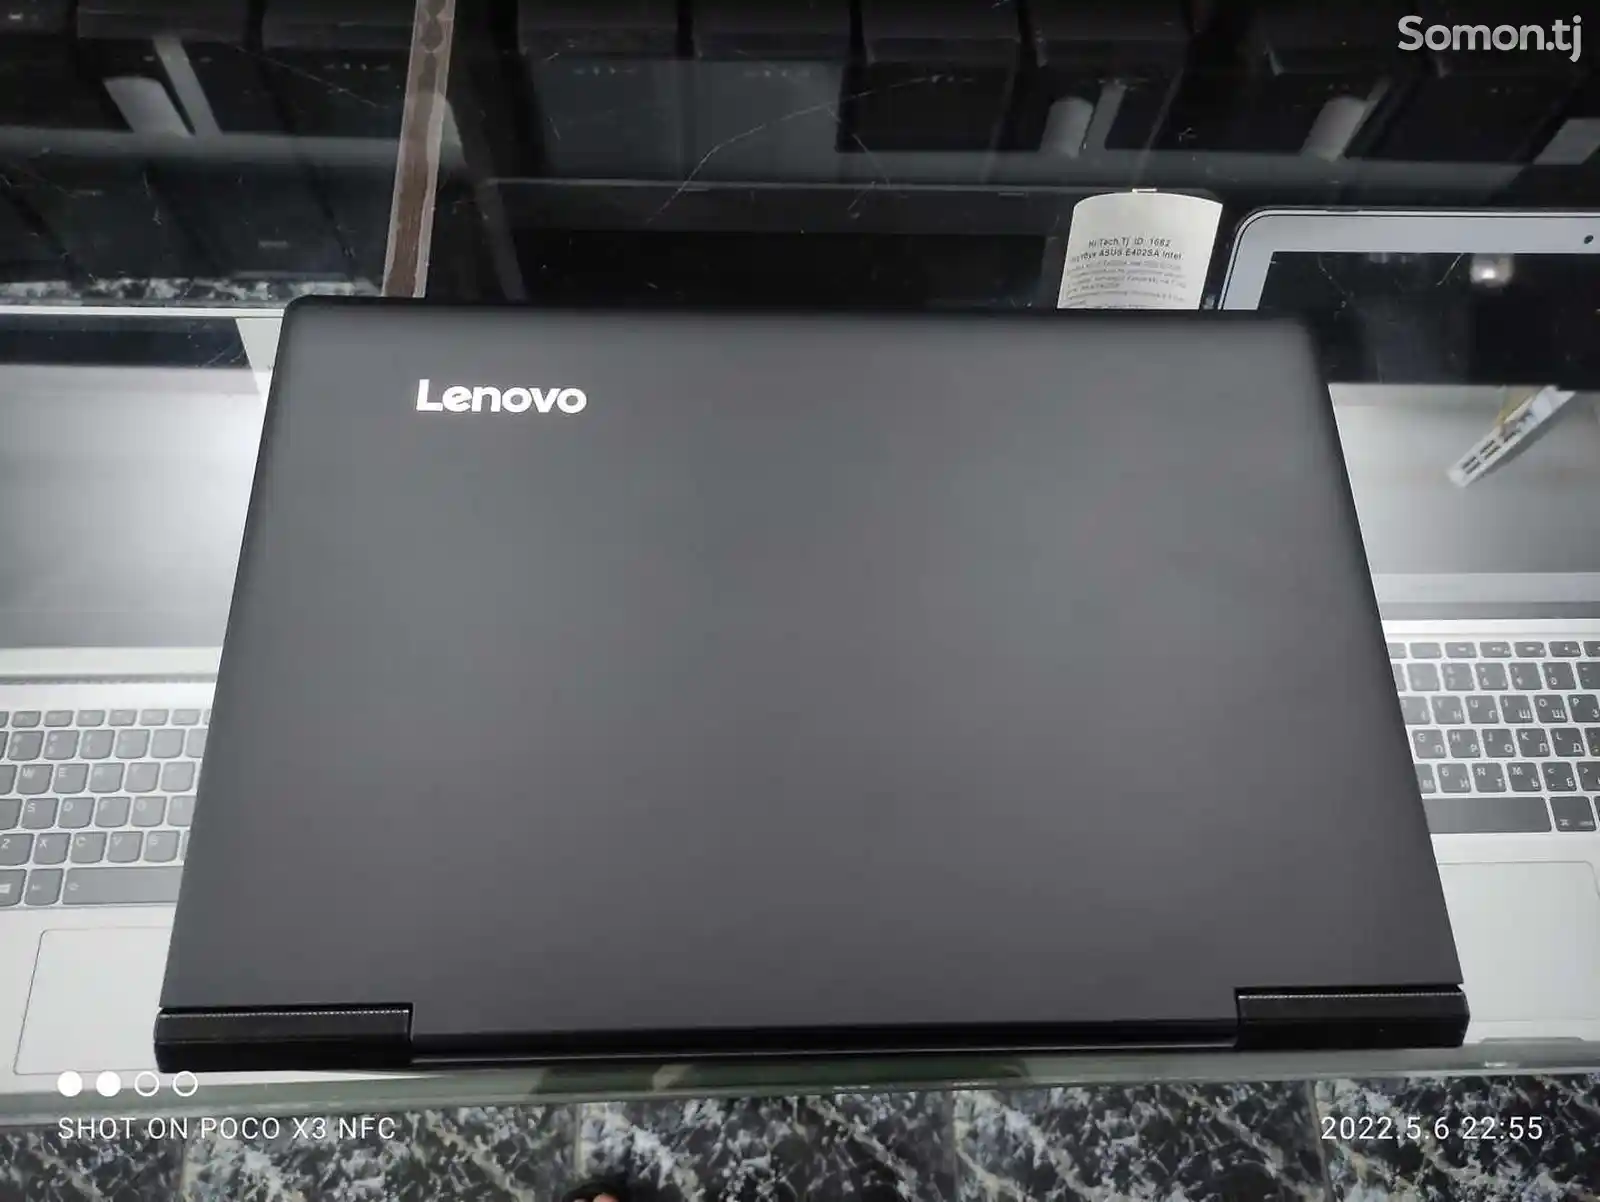 Игровой ноутбук Lenovo Ideapad 700 Gaming Core i5-6300HQ GTX 950M 4GB-5